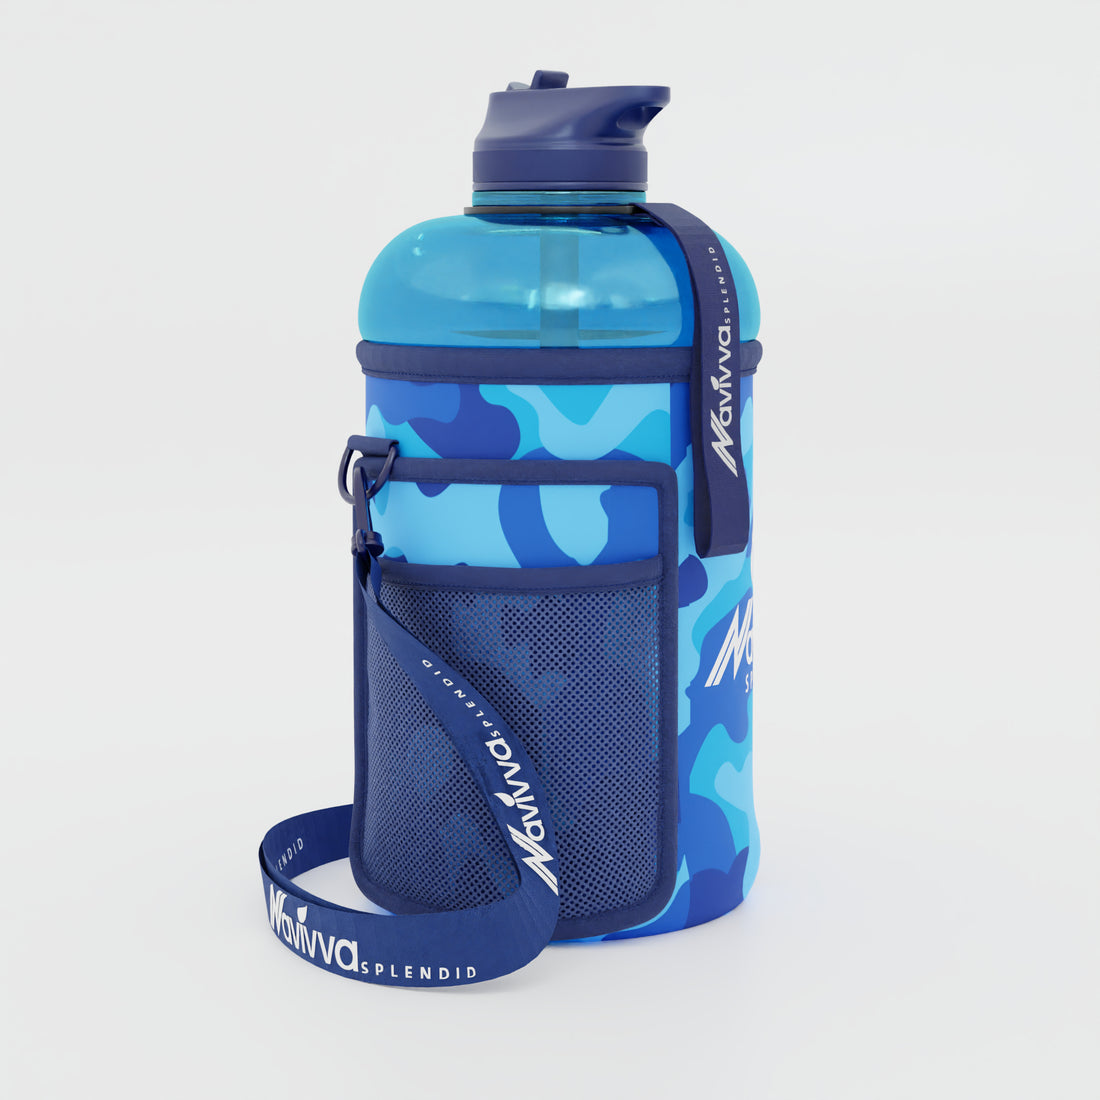 Navivva Splendid Blue Water Bottle with Sleeve